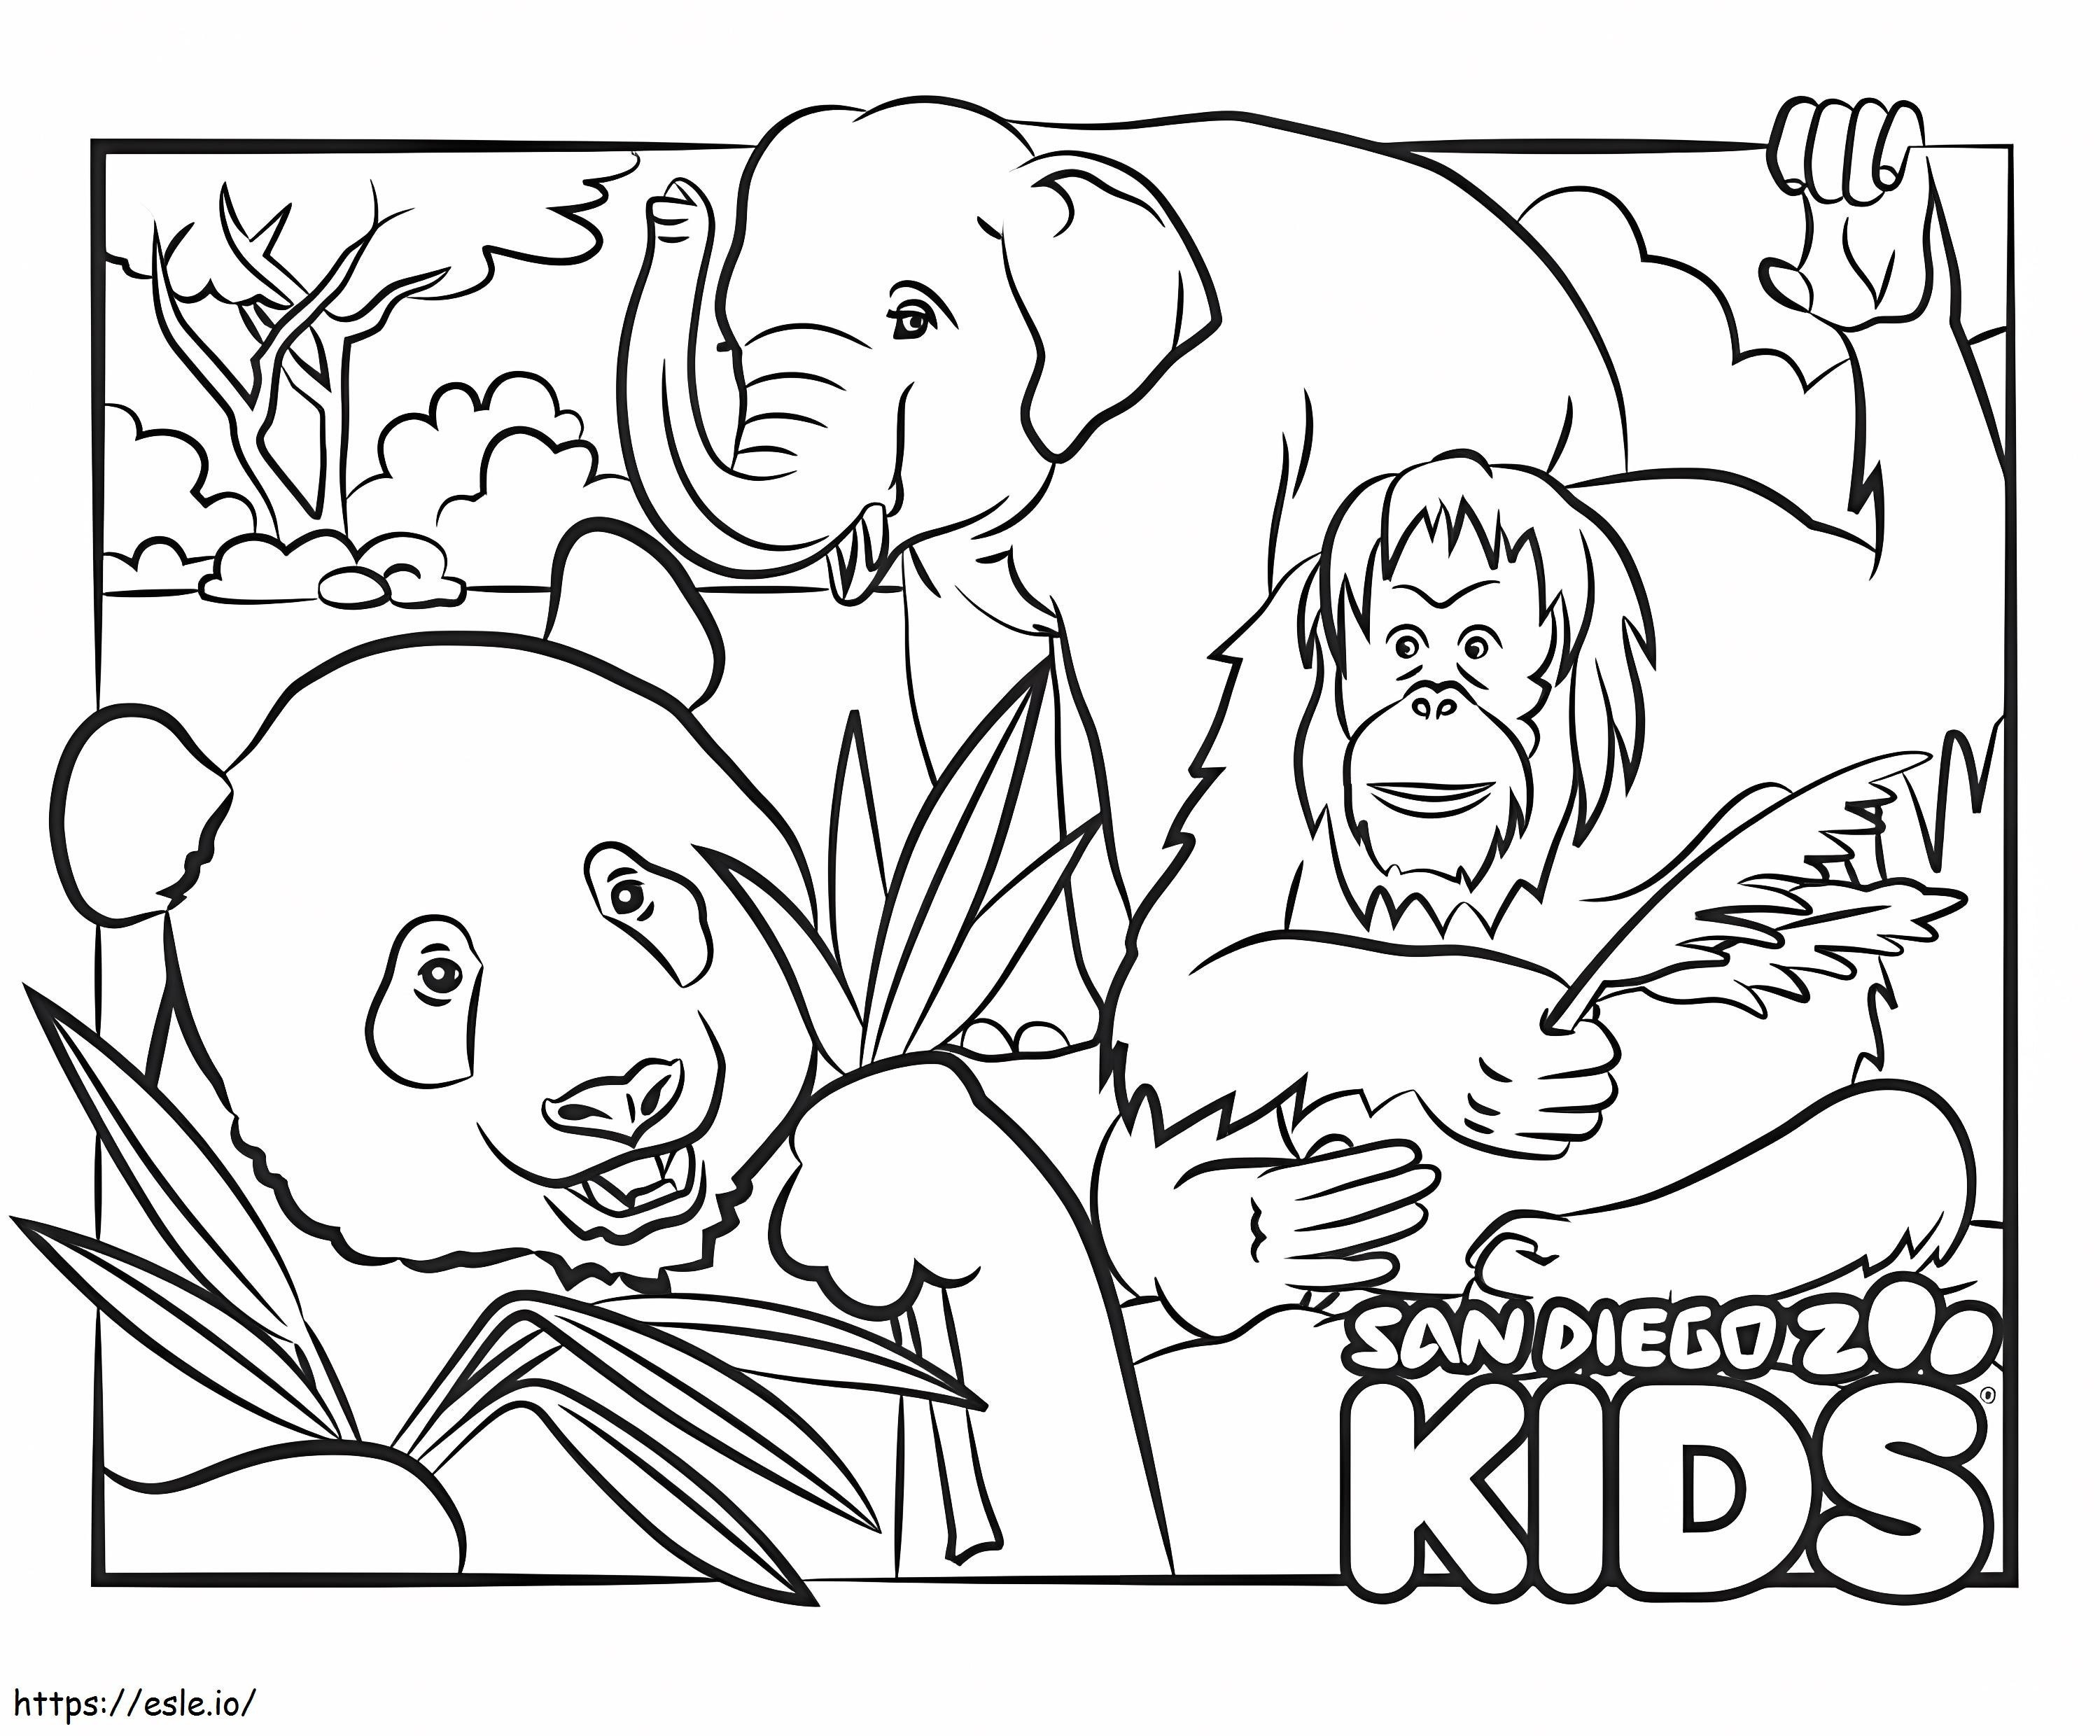 Orangutan Panda And Elephant coloring page